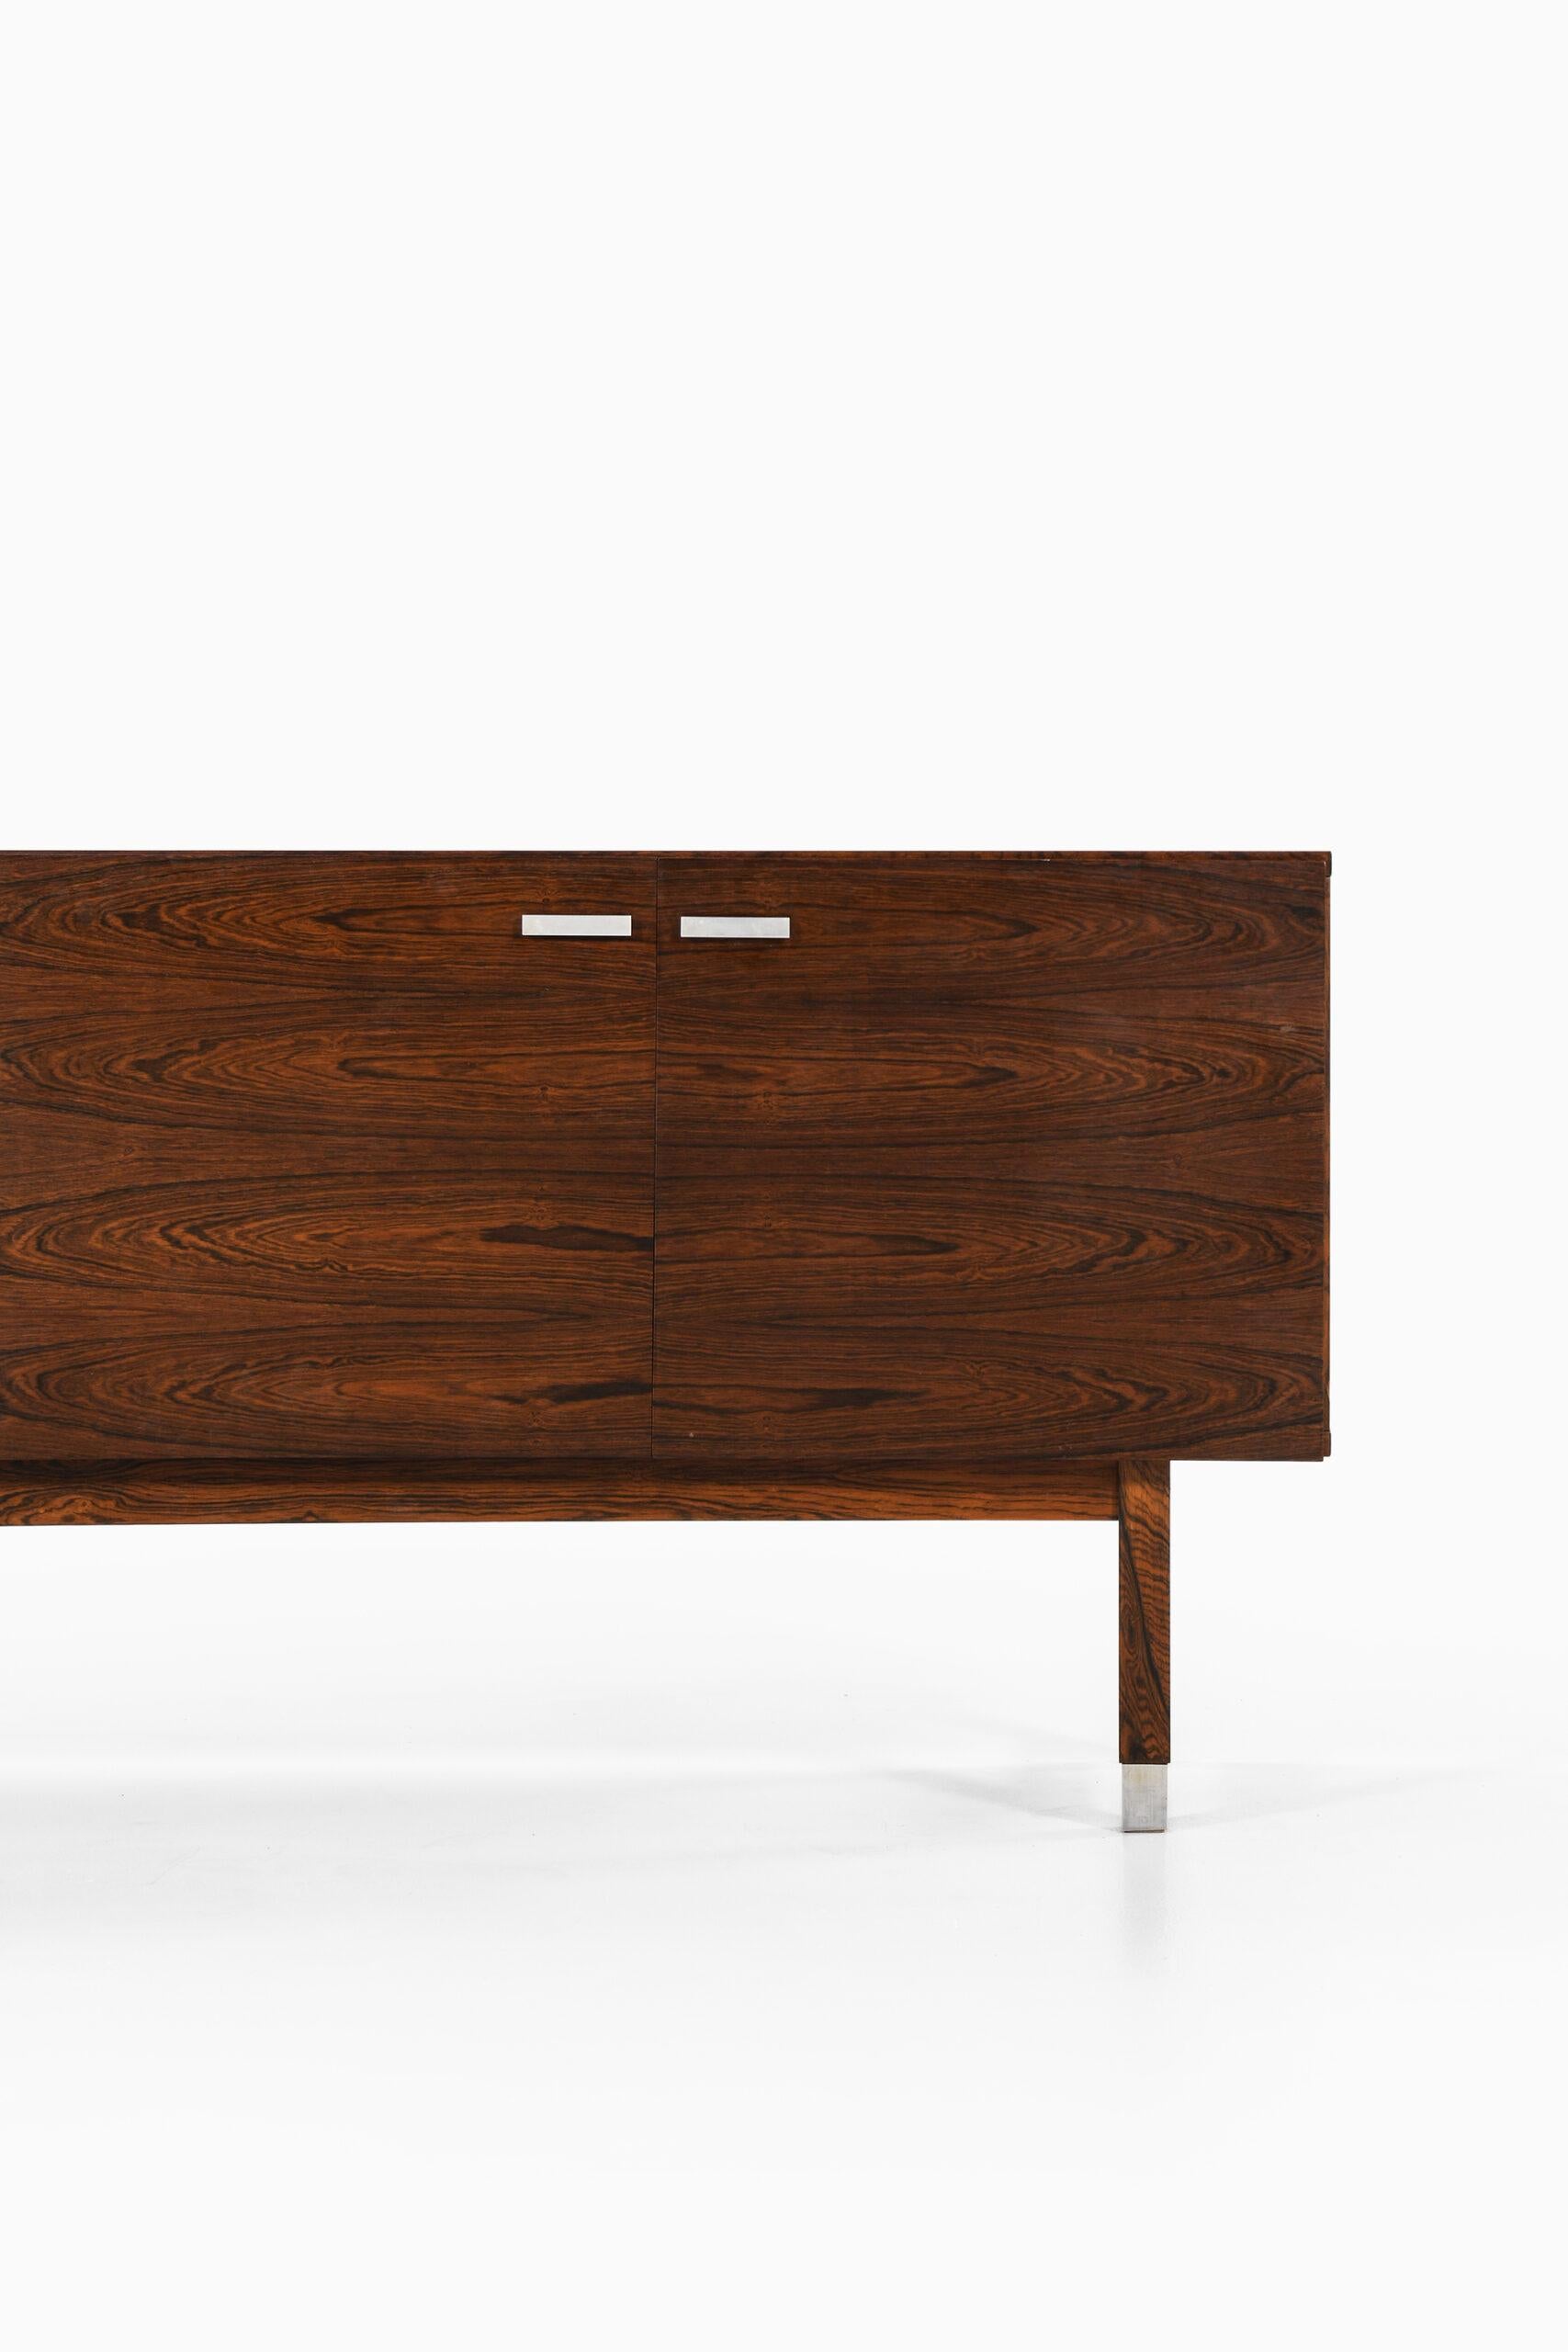 Rare sideboard in rosewood designed by Kai Kristiansen. Produced by Preben Skov Andersen, PSA Furniture in Denmark.